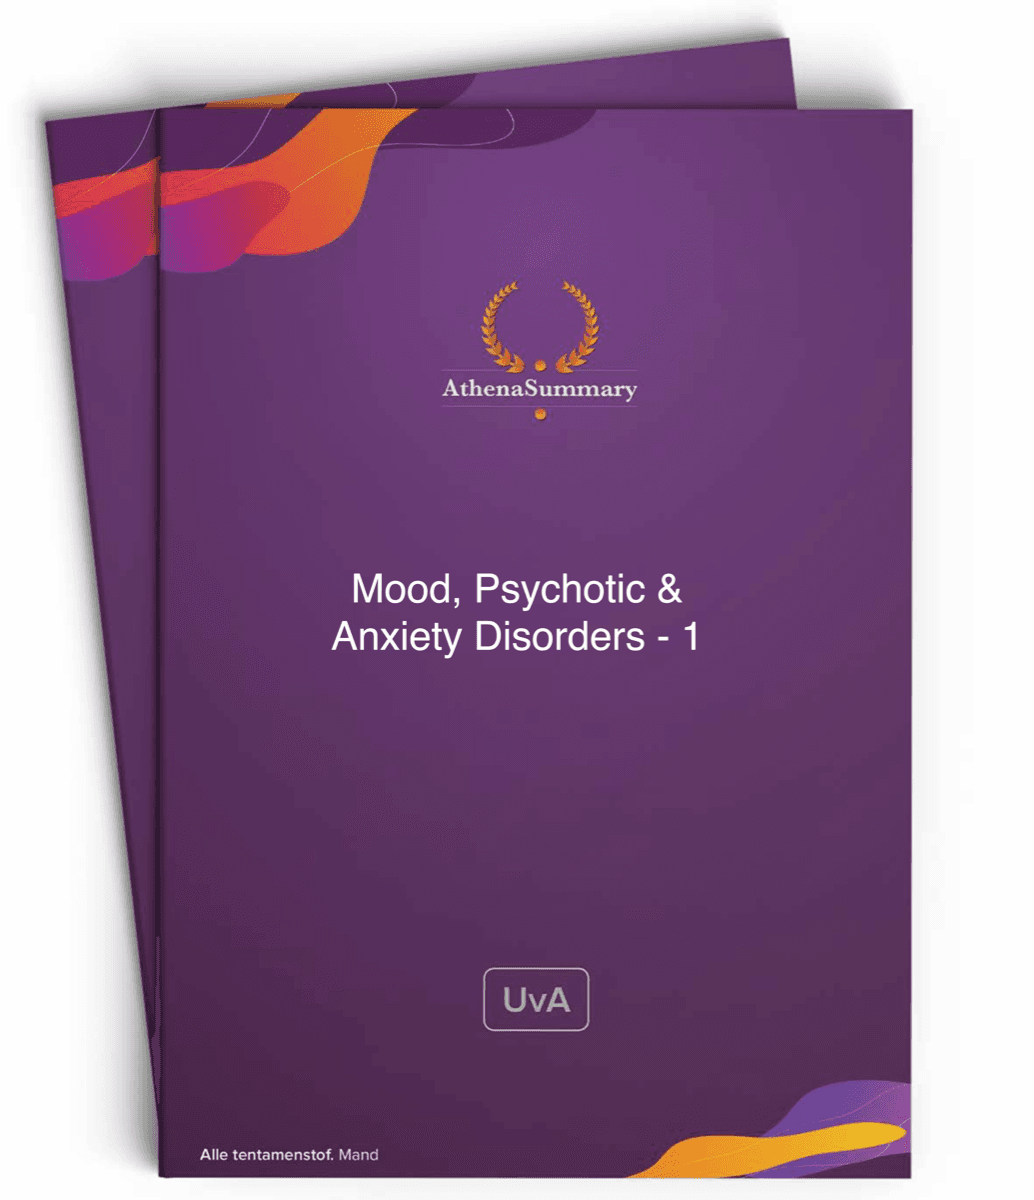 Literature Summary: Mood, Anxiety & Psychotic Disorders - 1